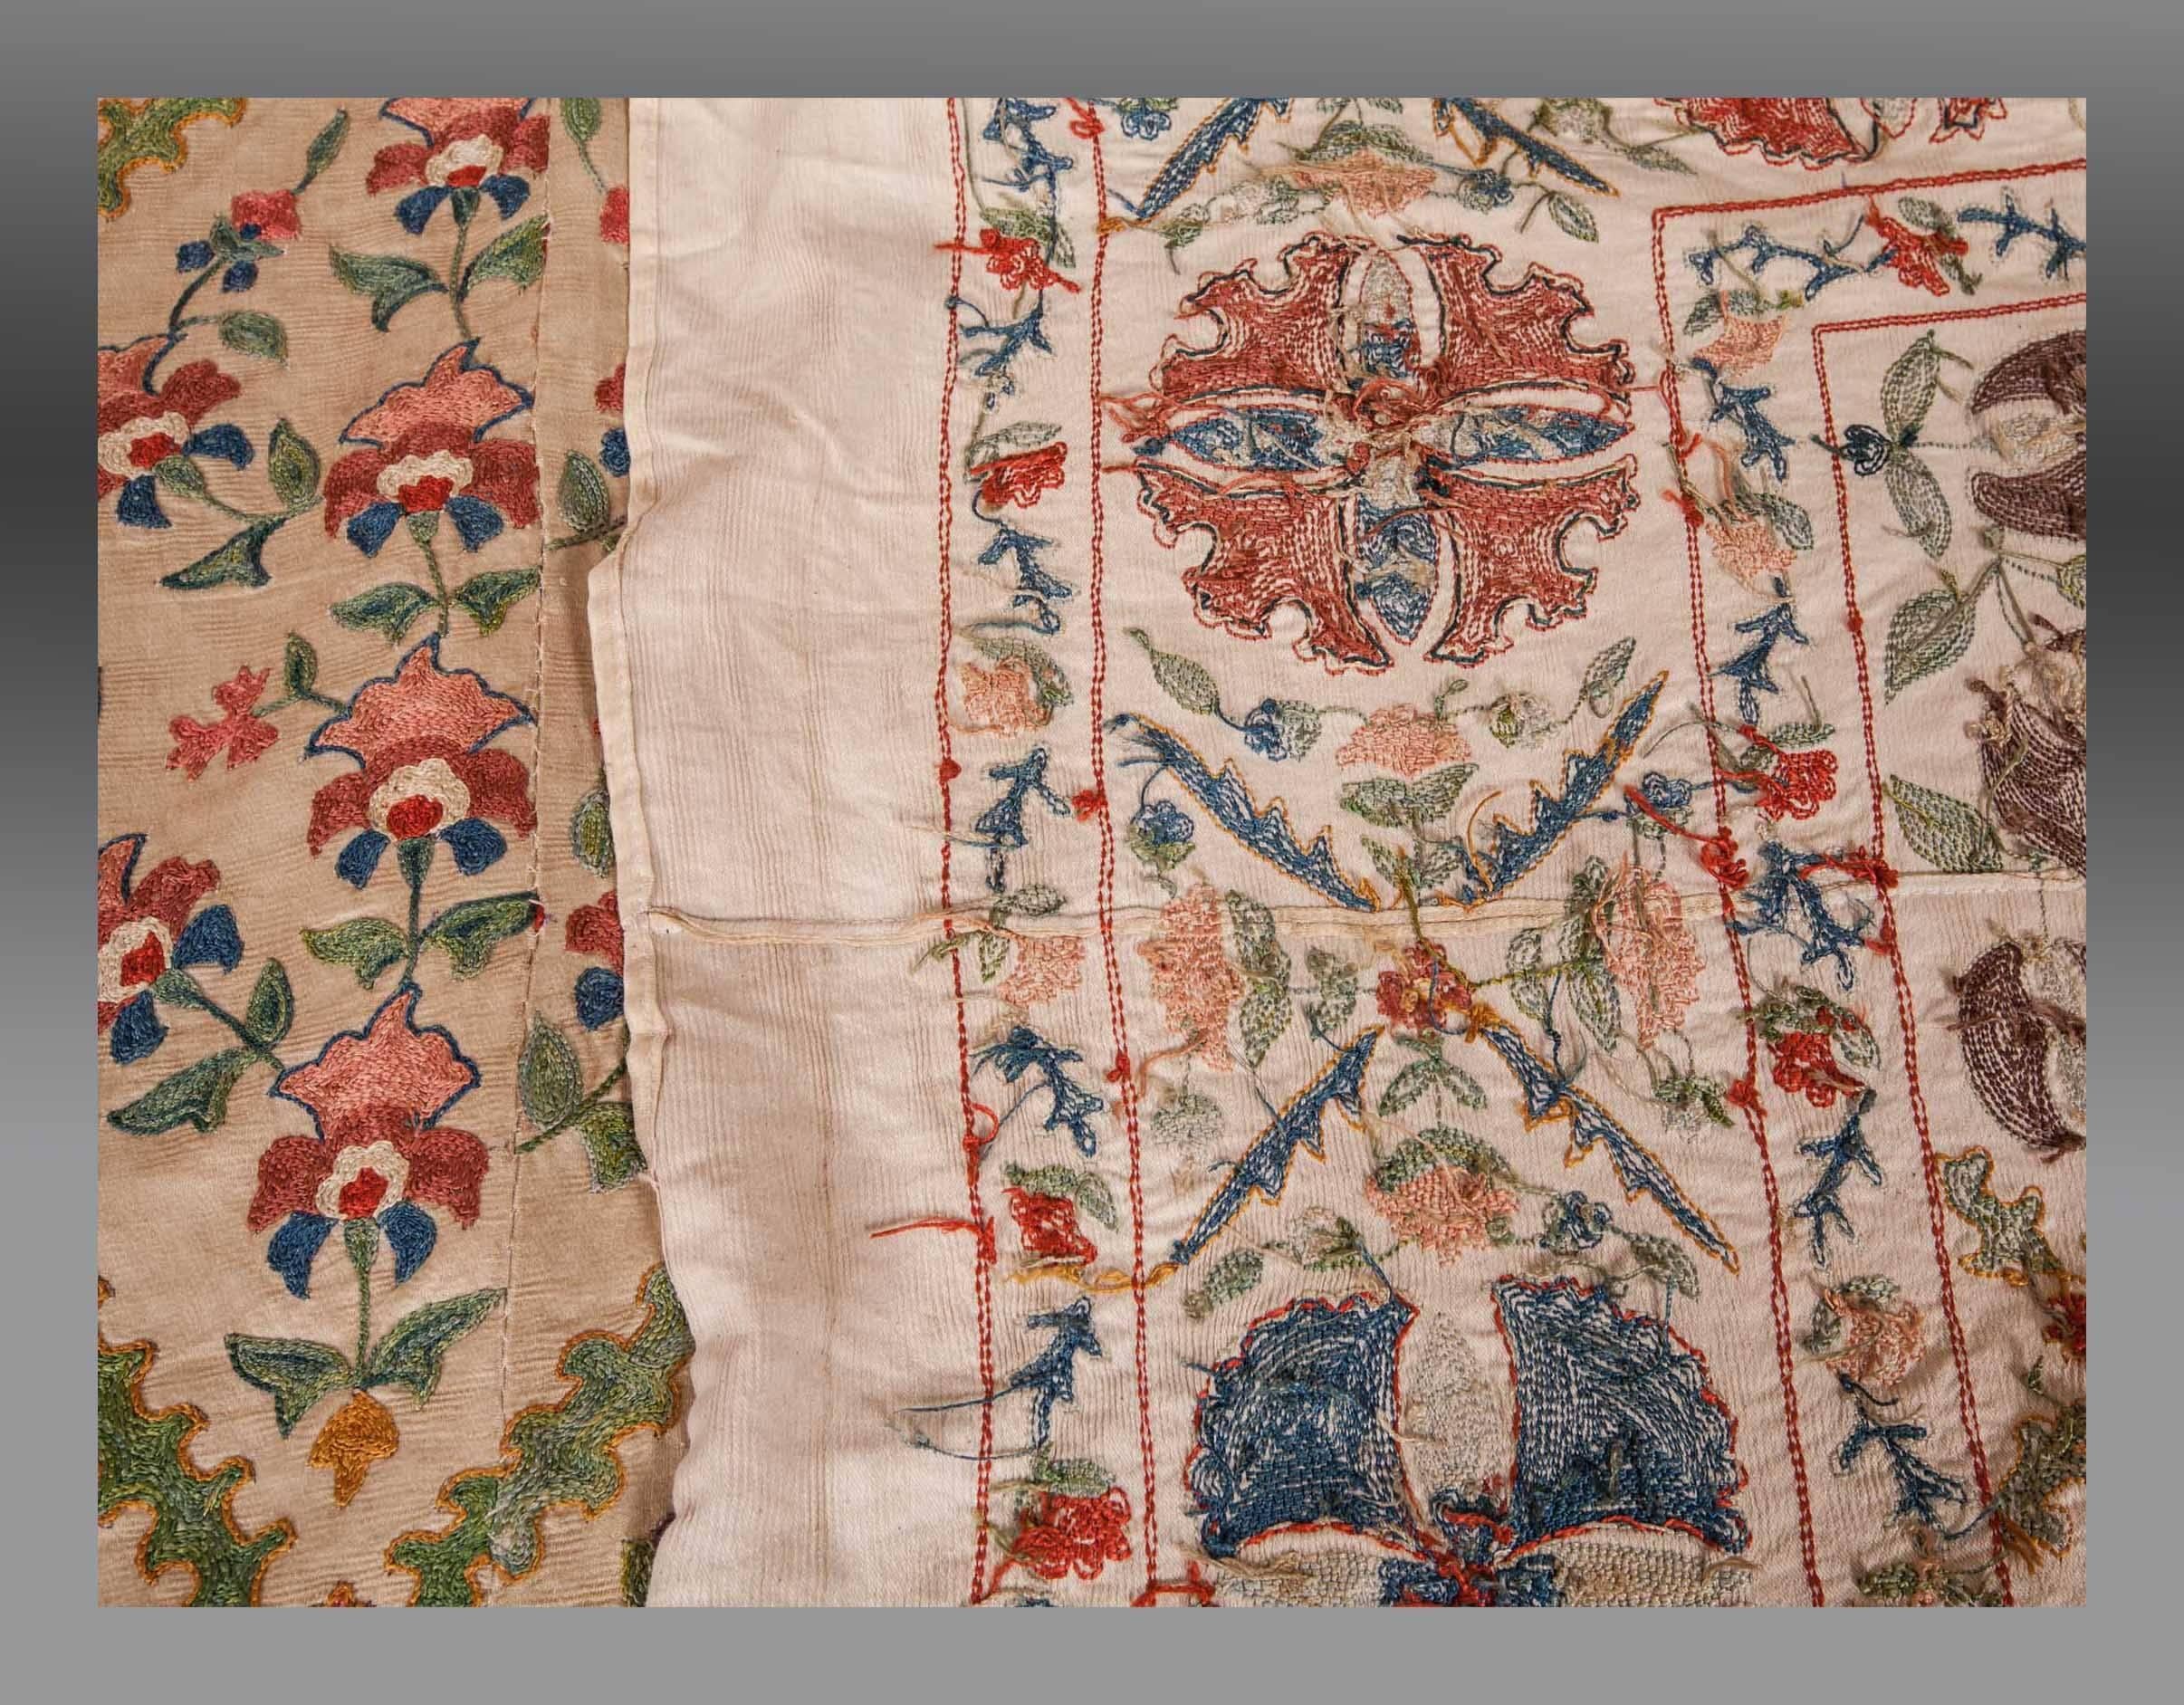 Contemporary Uzbek Silk Embroidery, Central Asia For Sale 3